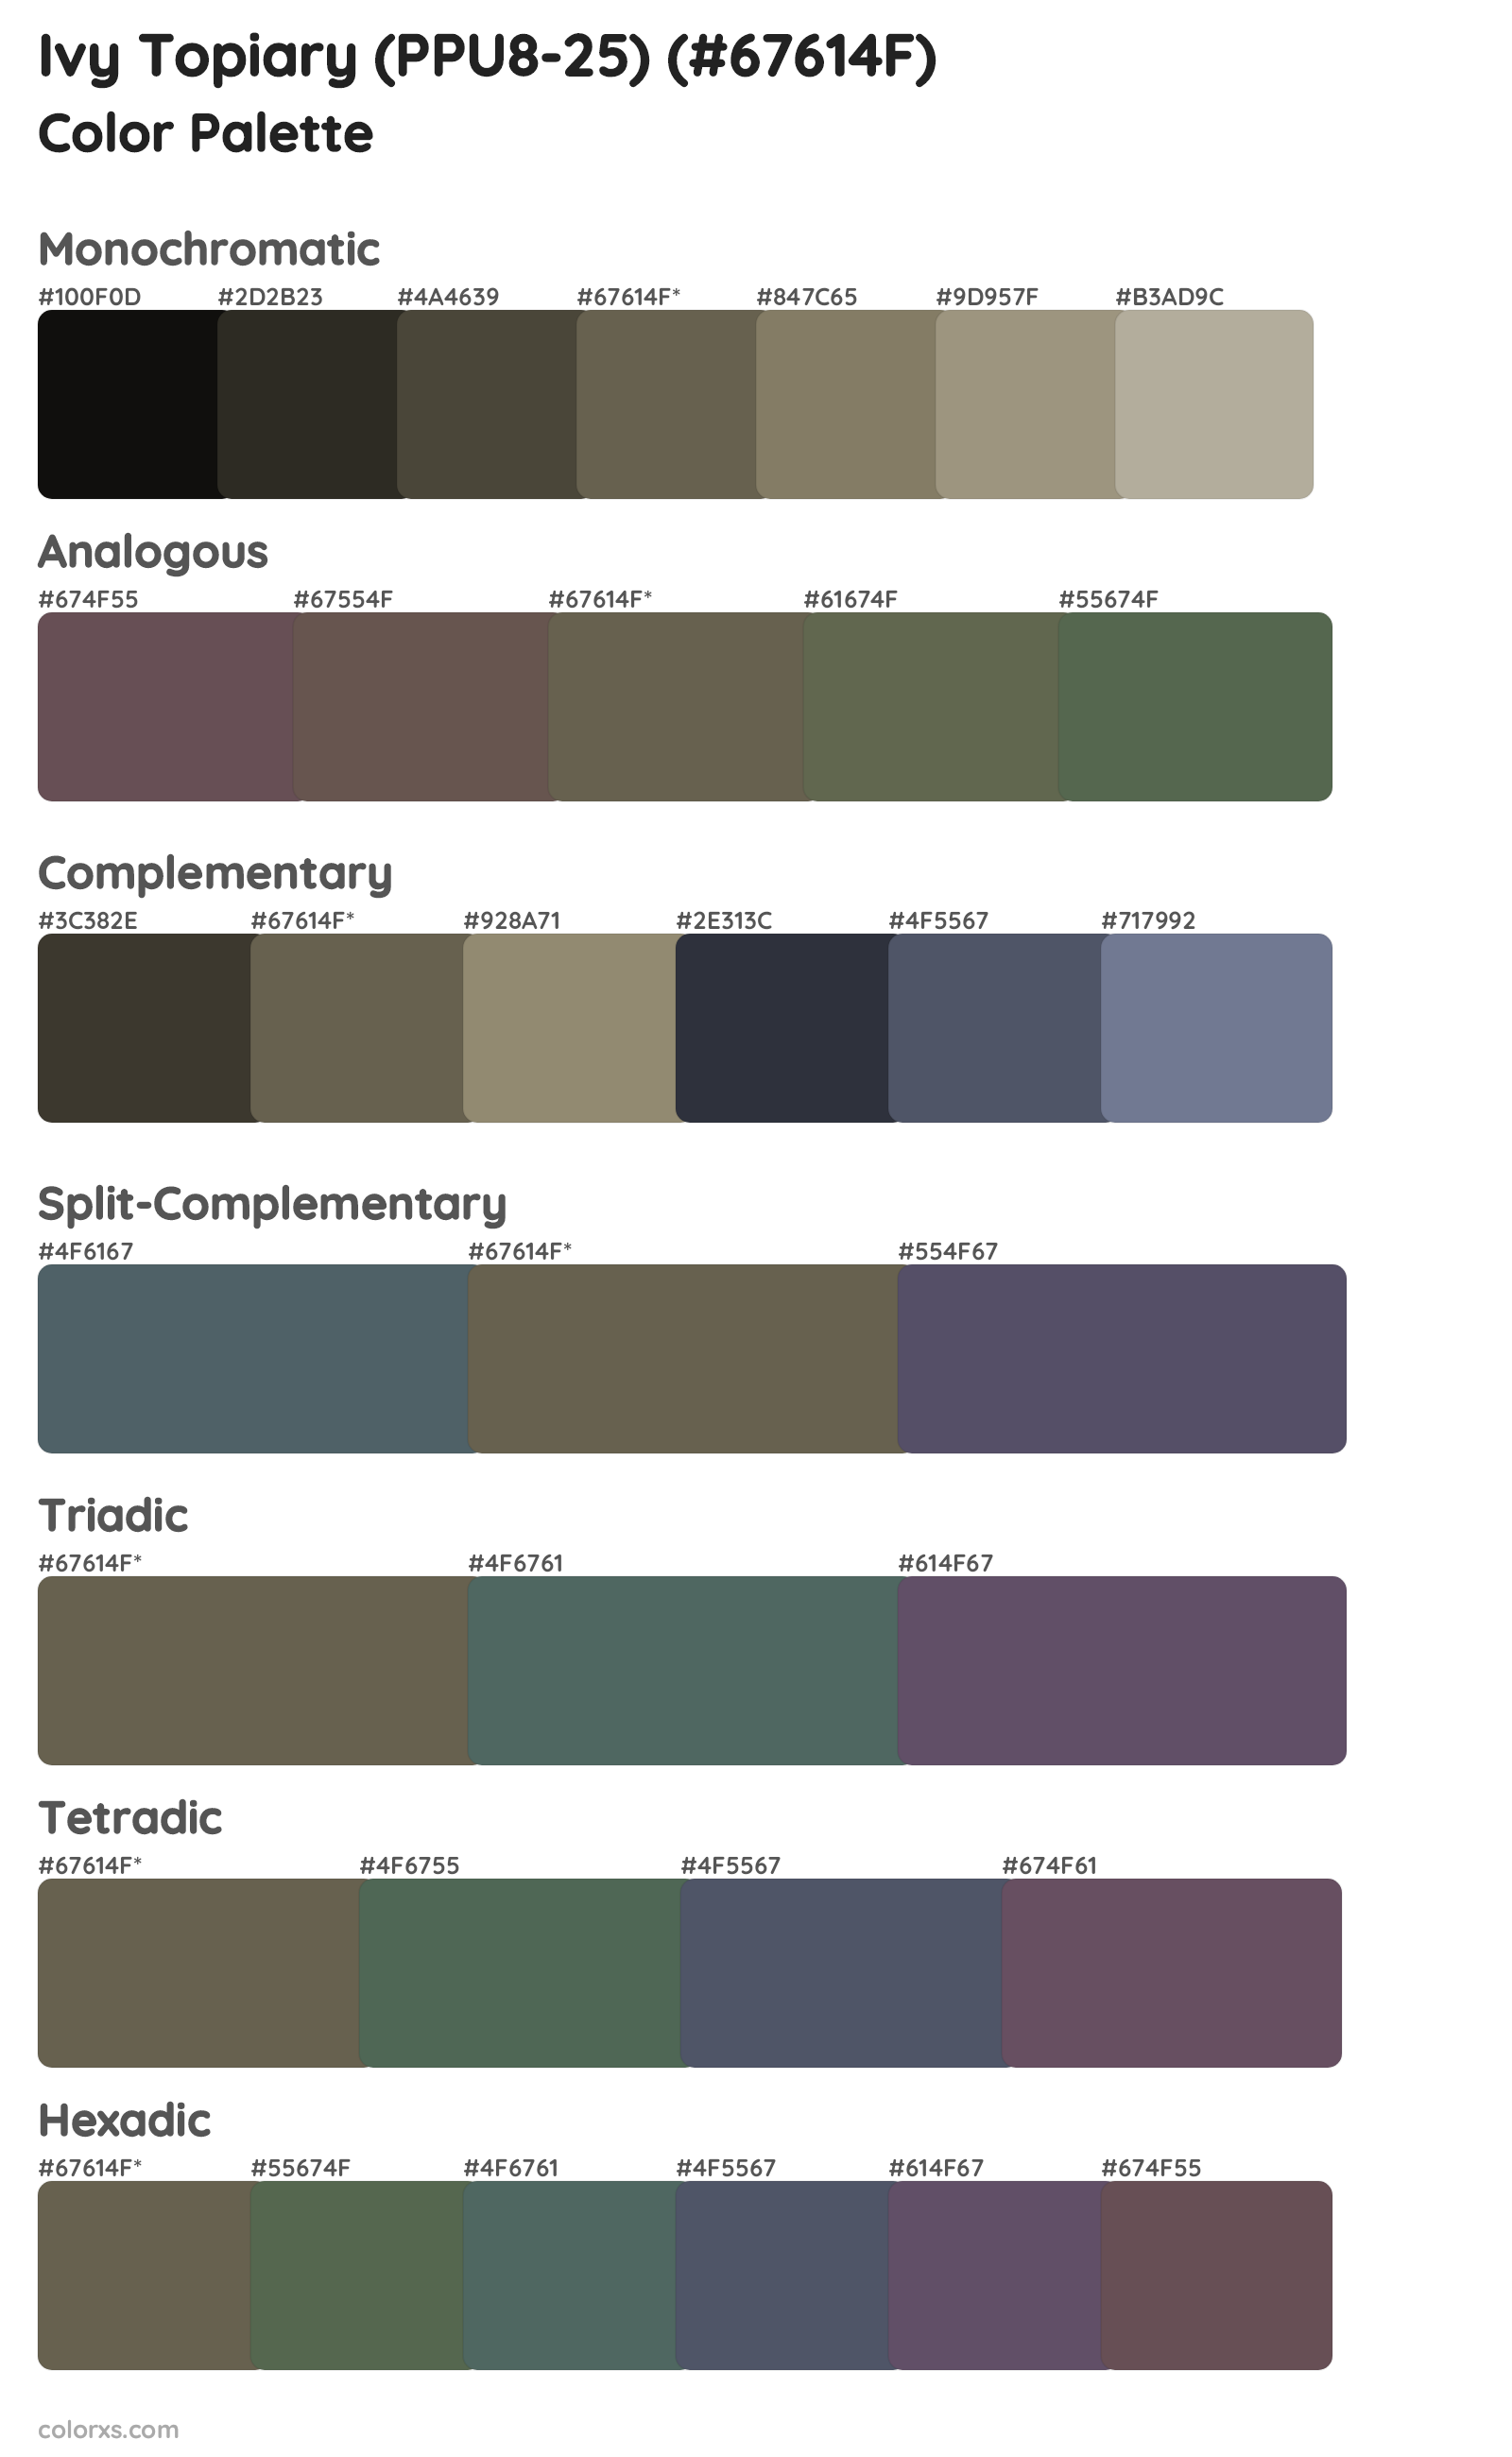 Ivy Topiary (PPU8-25) Color Scheme Palettes